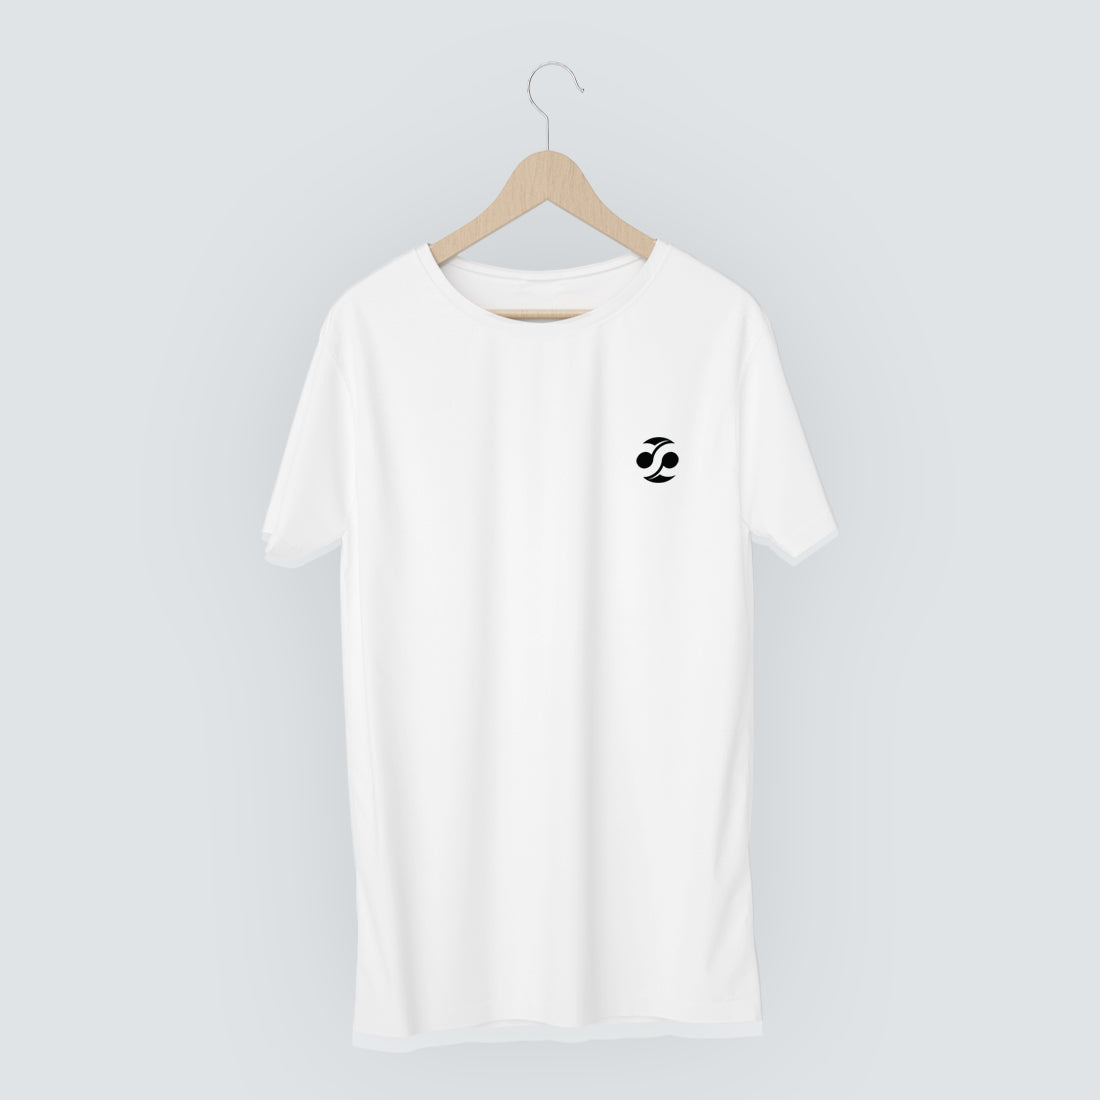 Cre8 Emblem Womens T-Shirt